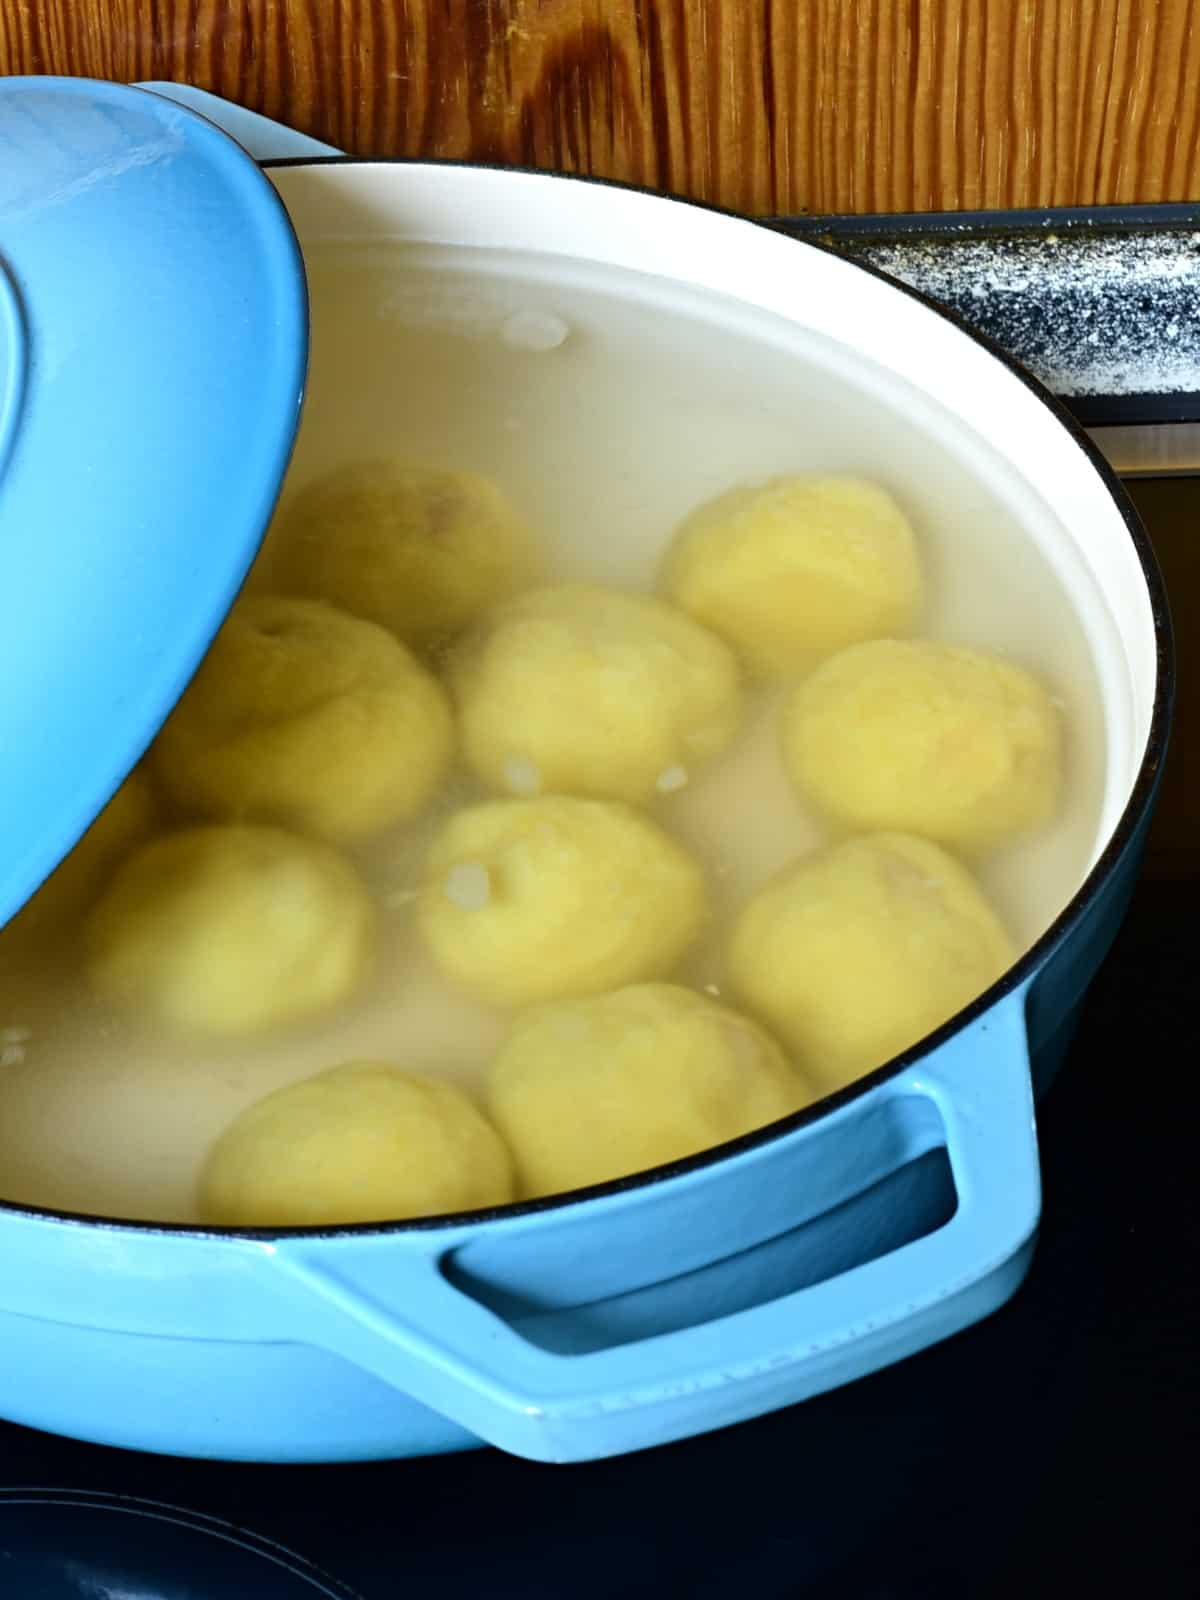 cooking duplings in a pot